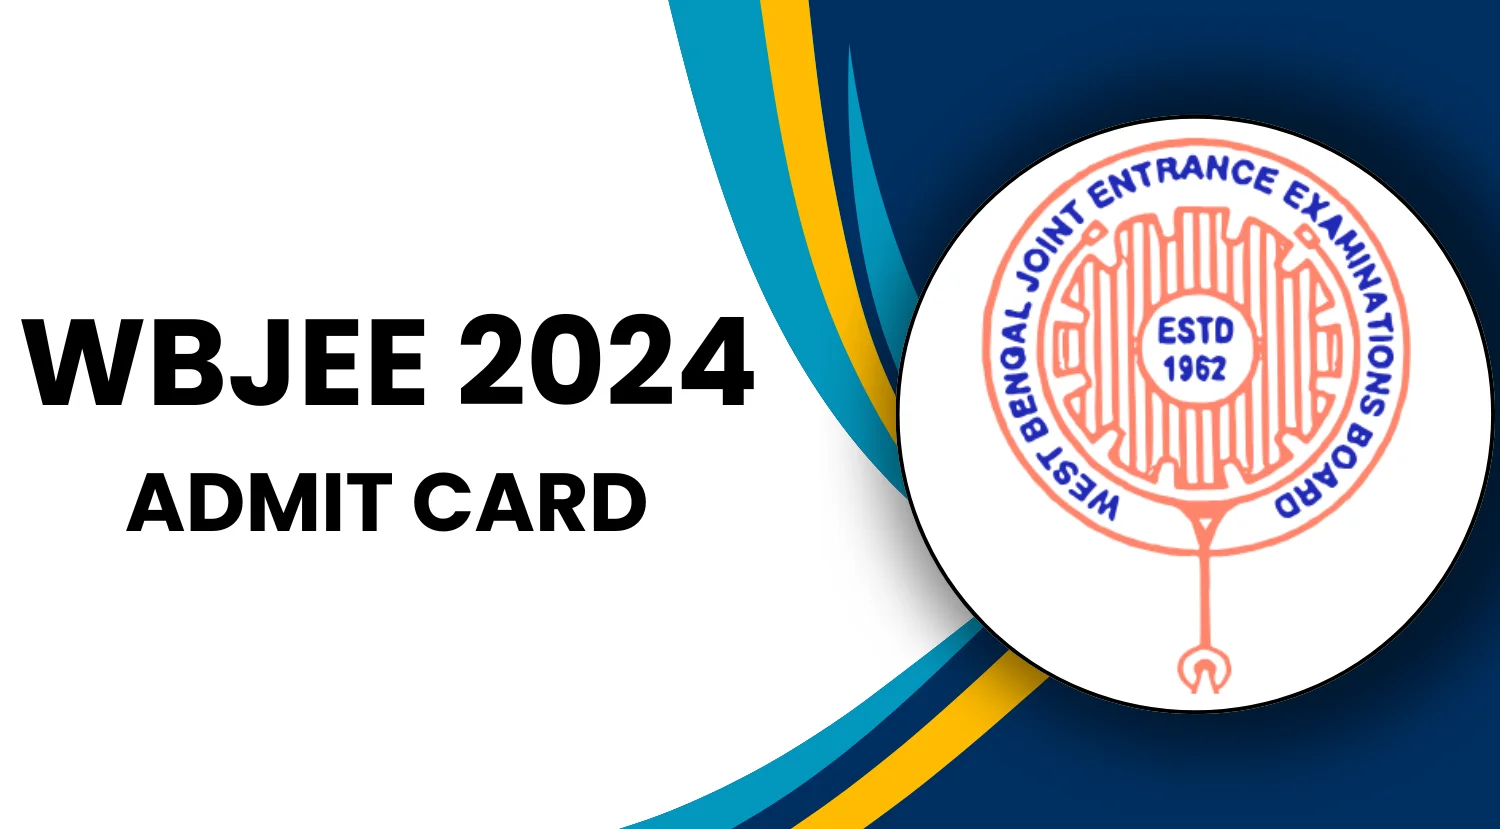 WBJEE Admit Card 2024